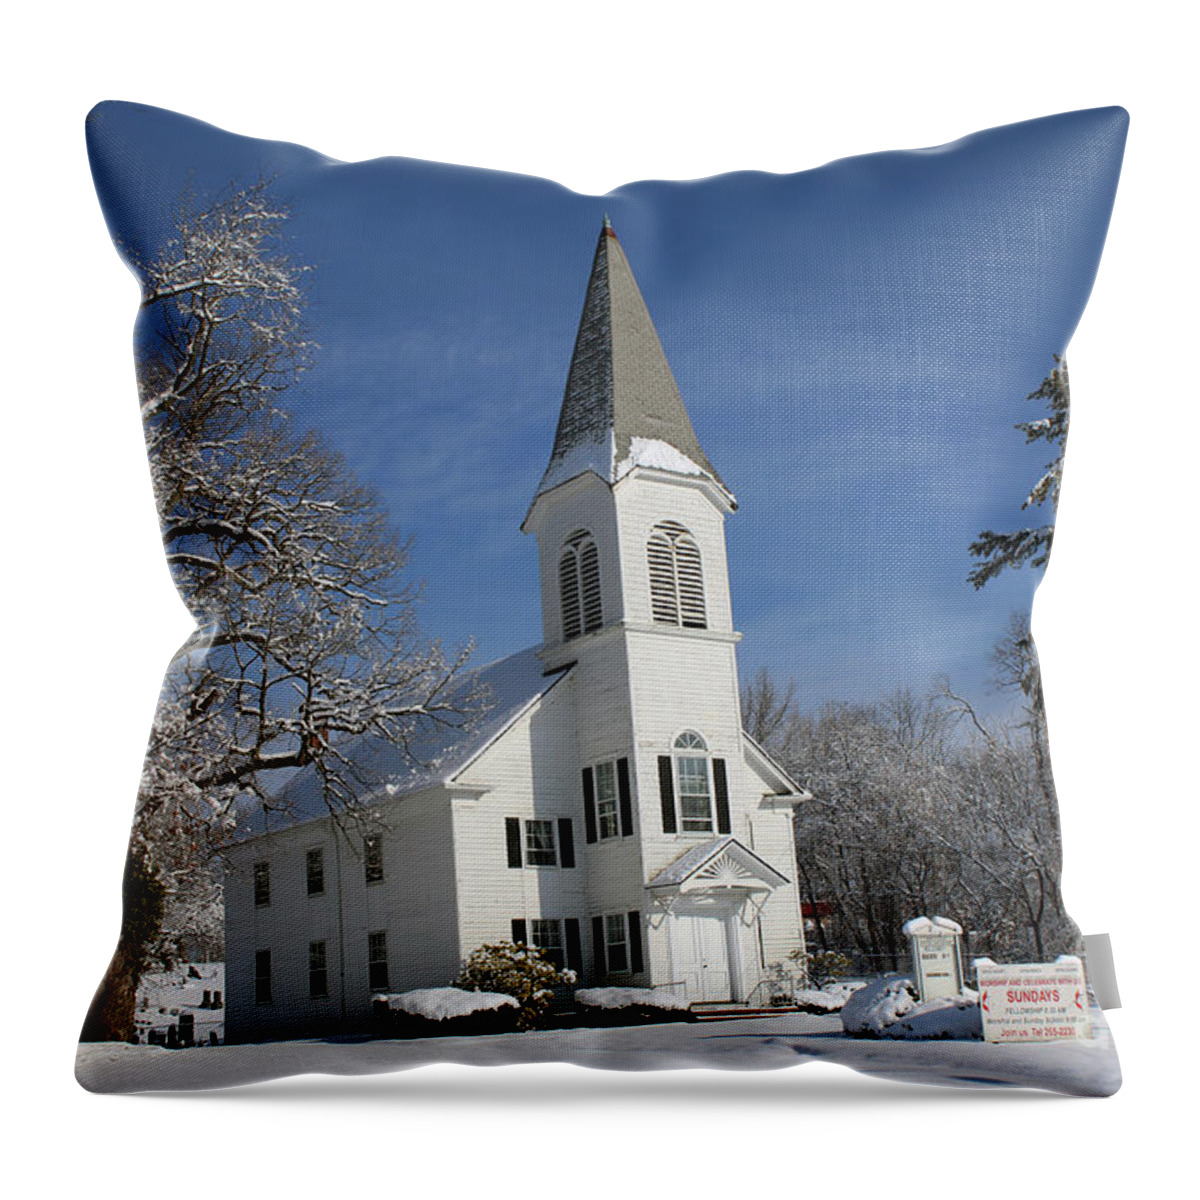 Hauppauge Throw Pillow featuring the photograph Hauppauge United Methodist Church by Steven Spak